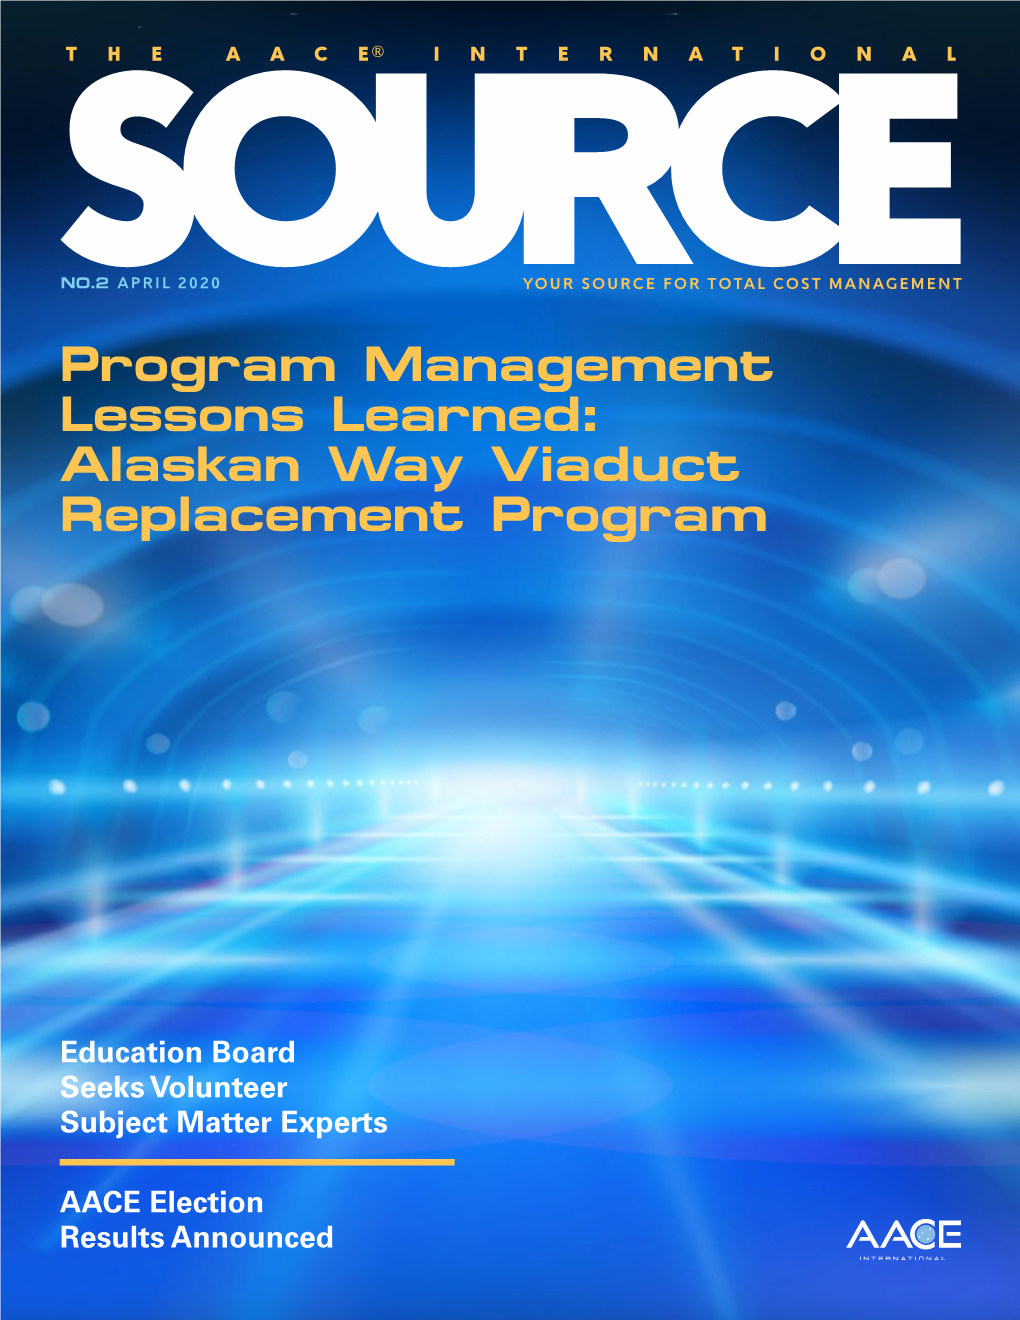 Program Management Lessons Learned: Alaskan Way Viaduct Replacement Program